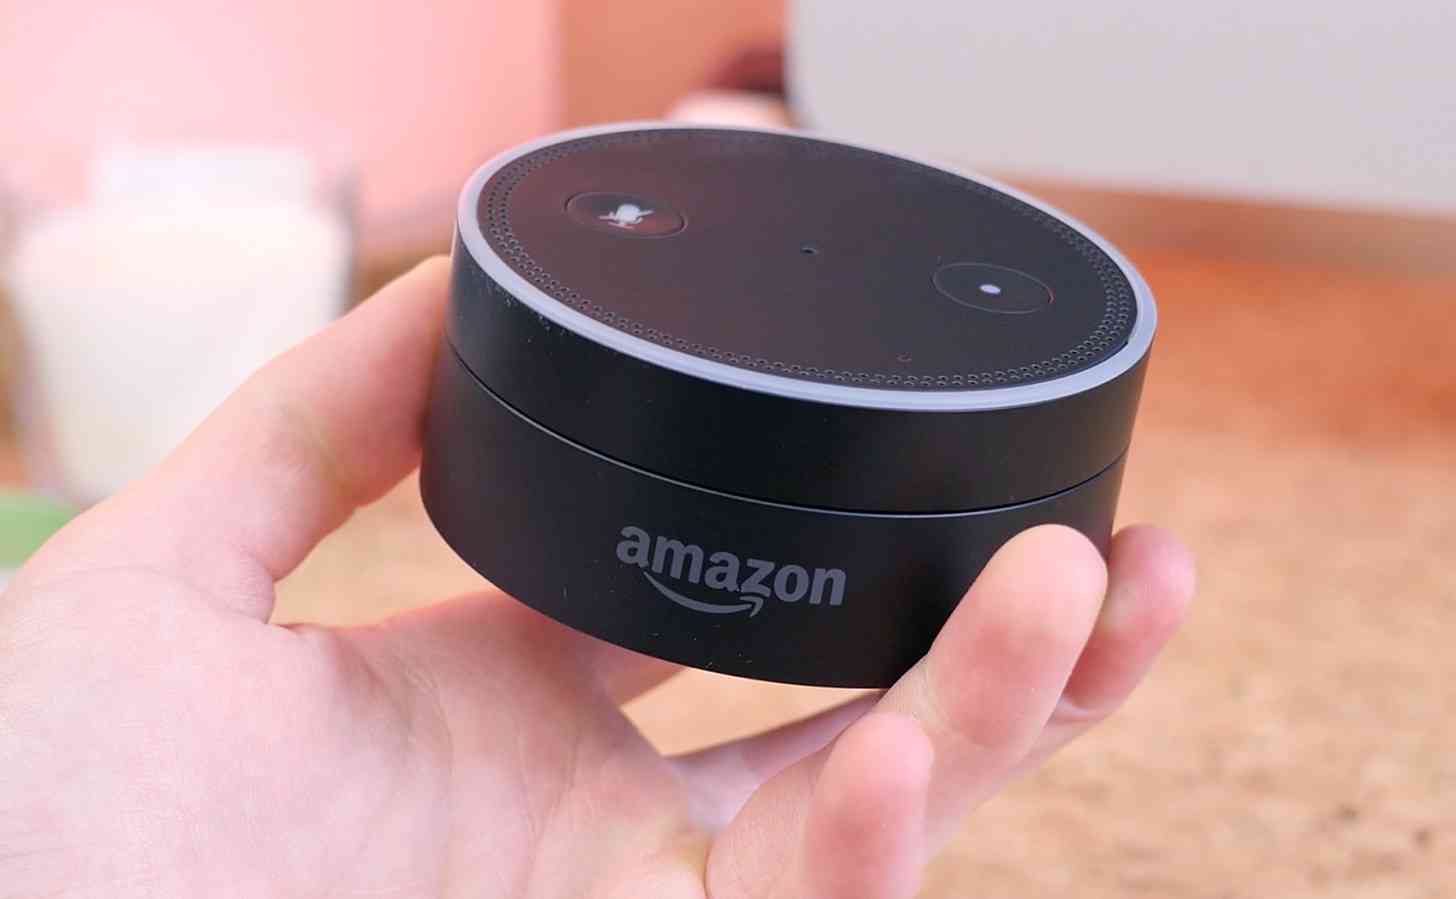 Amazon Echo Dot hands-on video